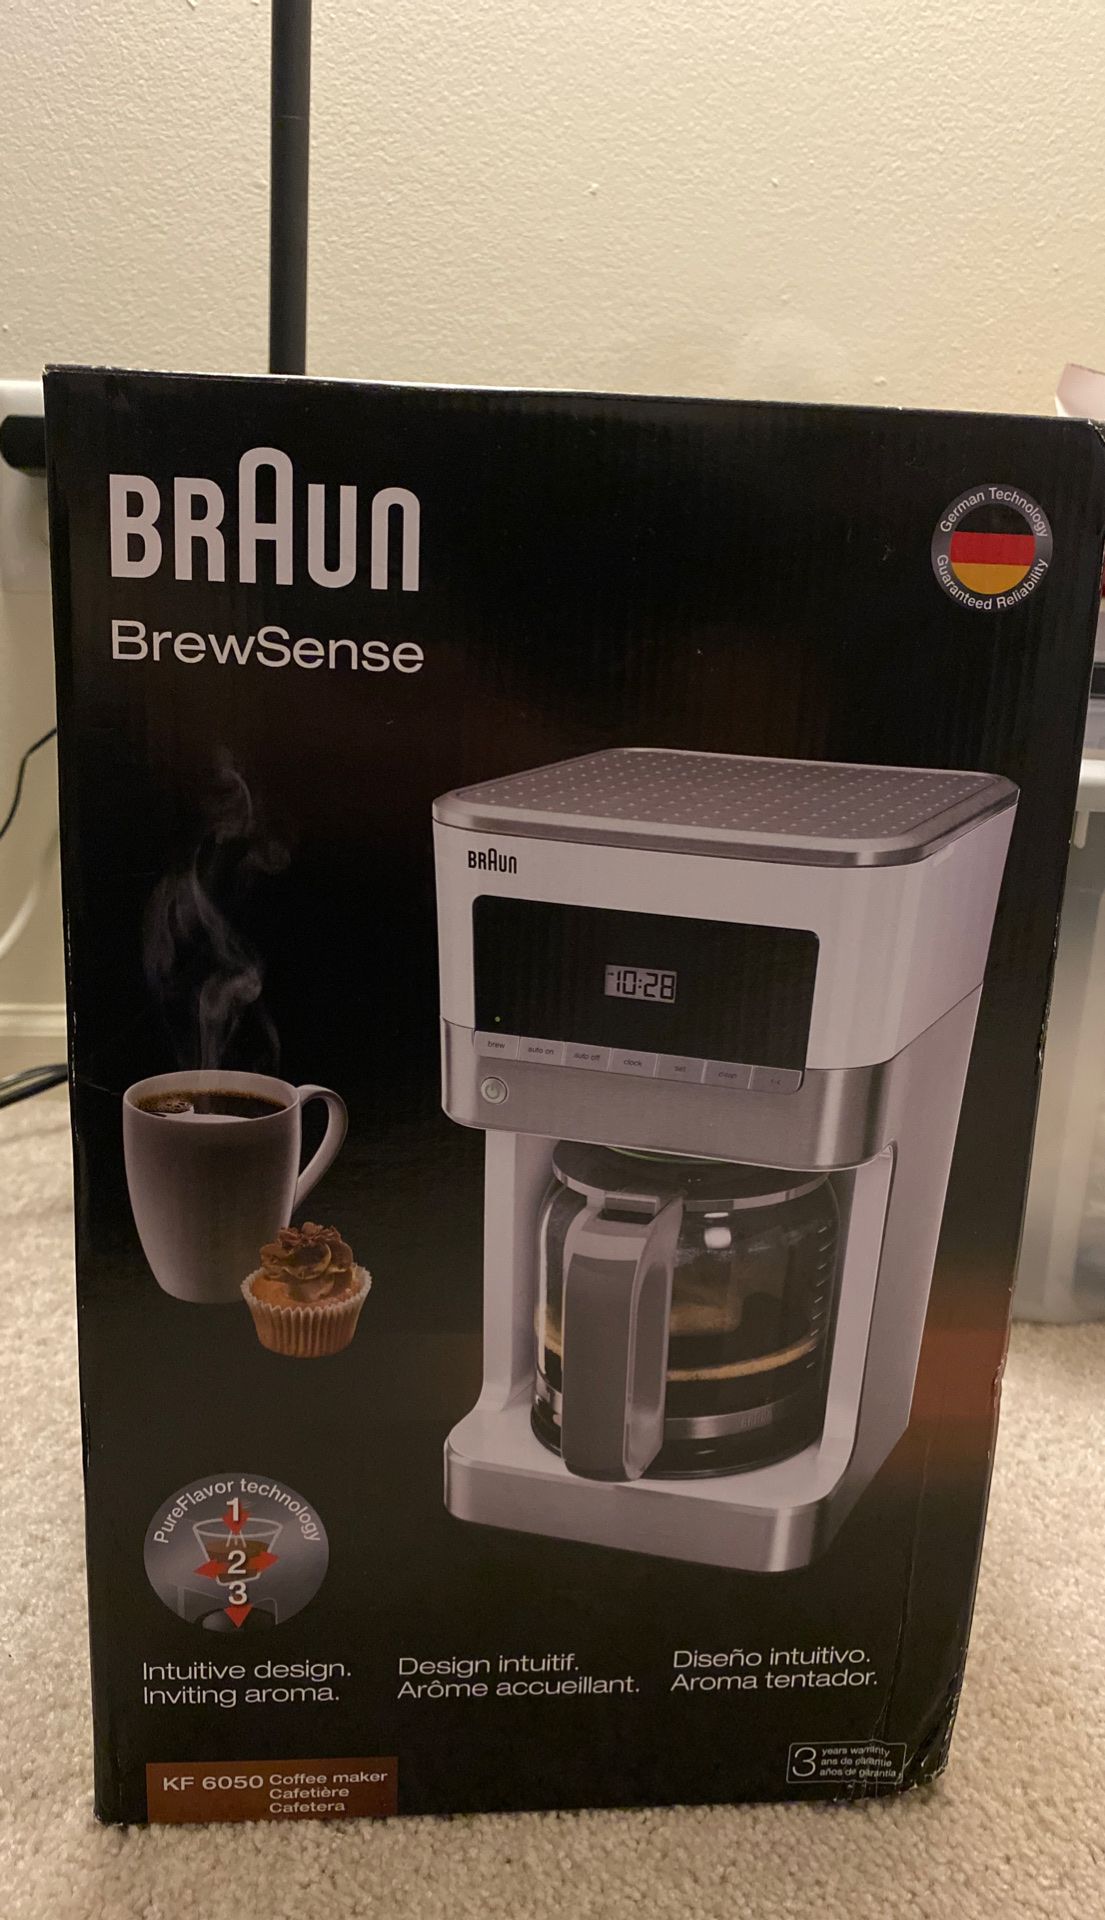 Braun BrewSense Coffee Maker